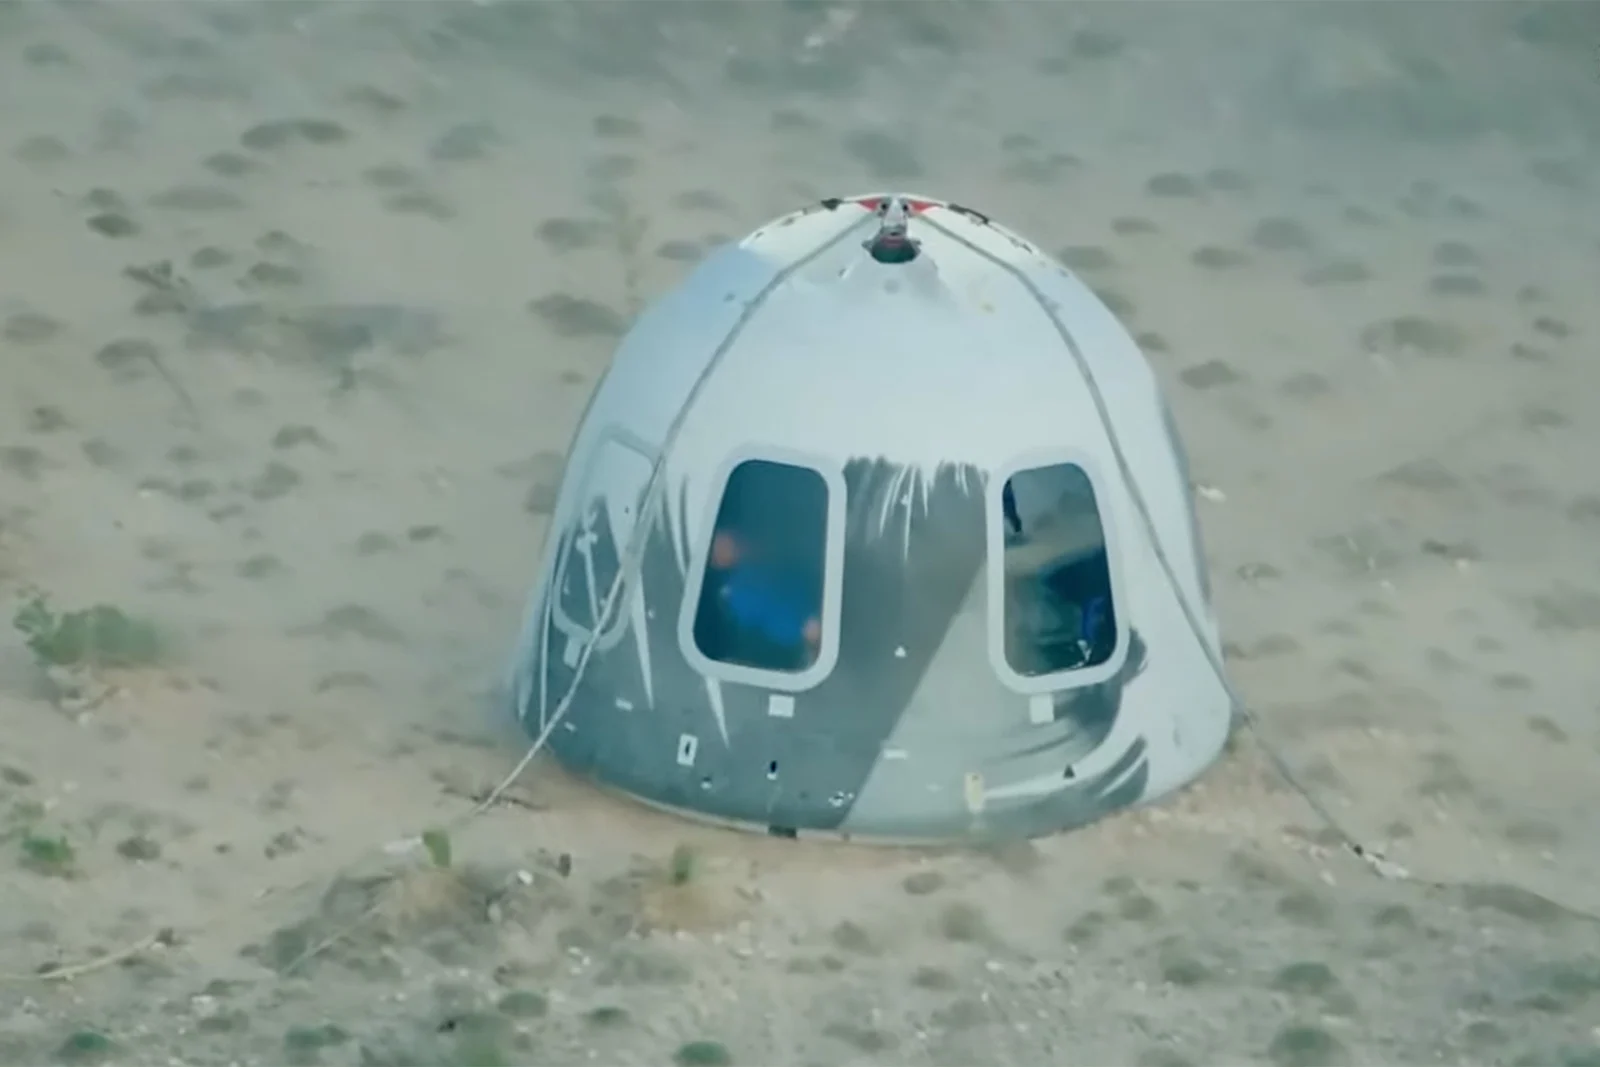 Blue Origin New Shepard capsule touchdown after first human spaceflight